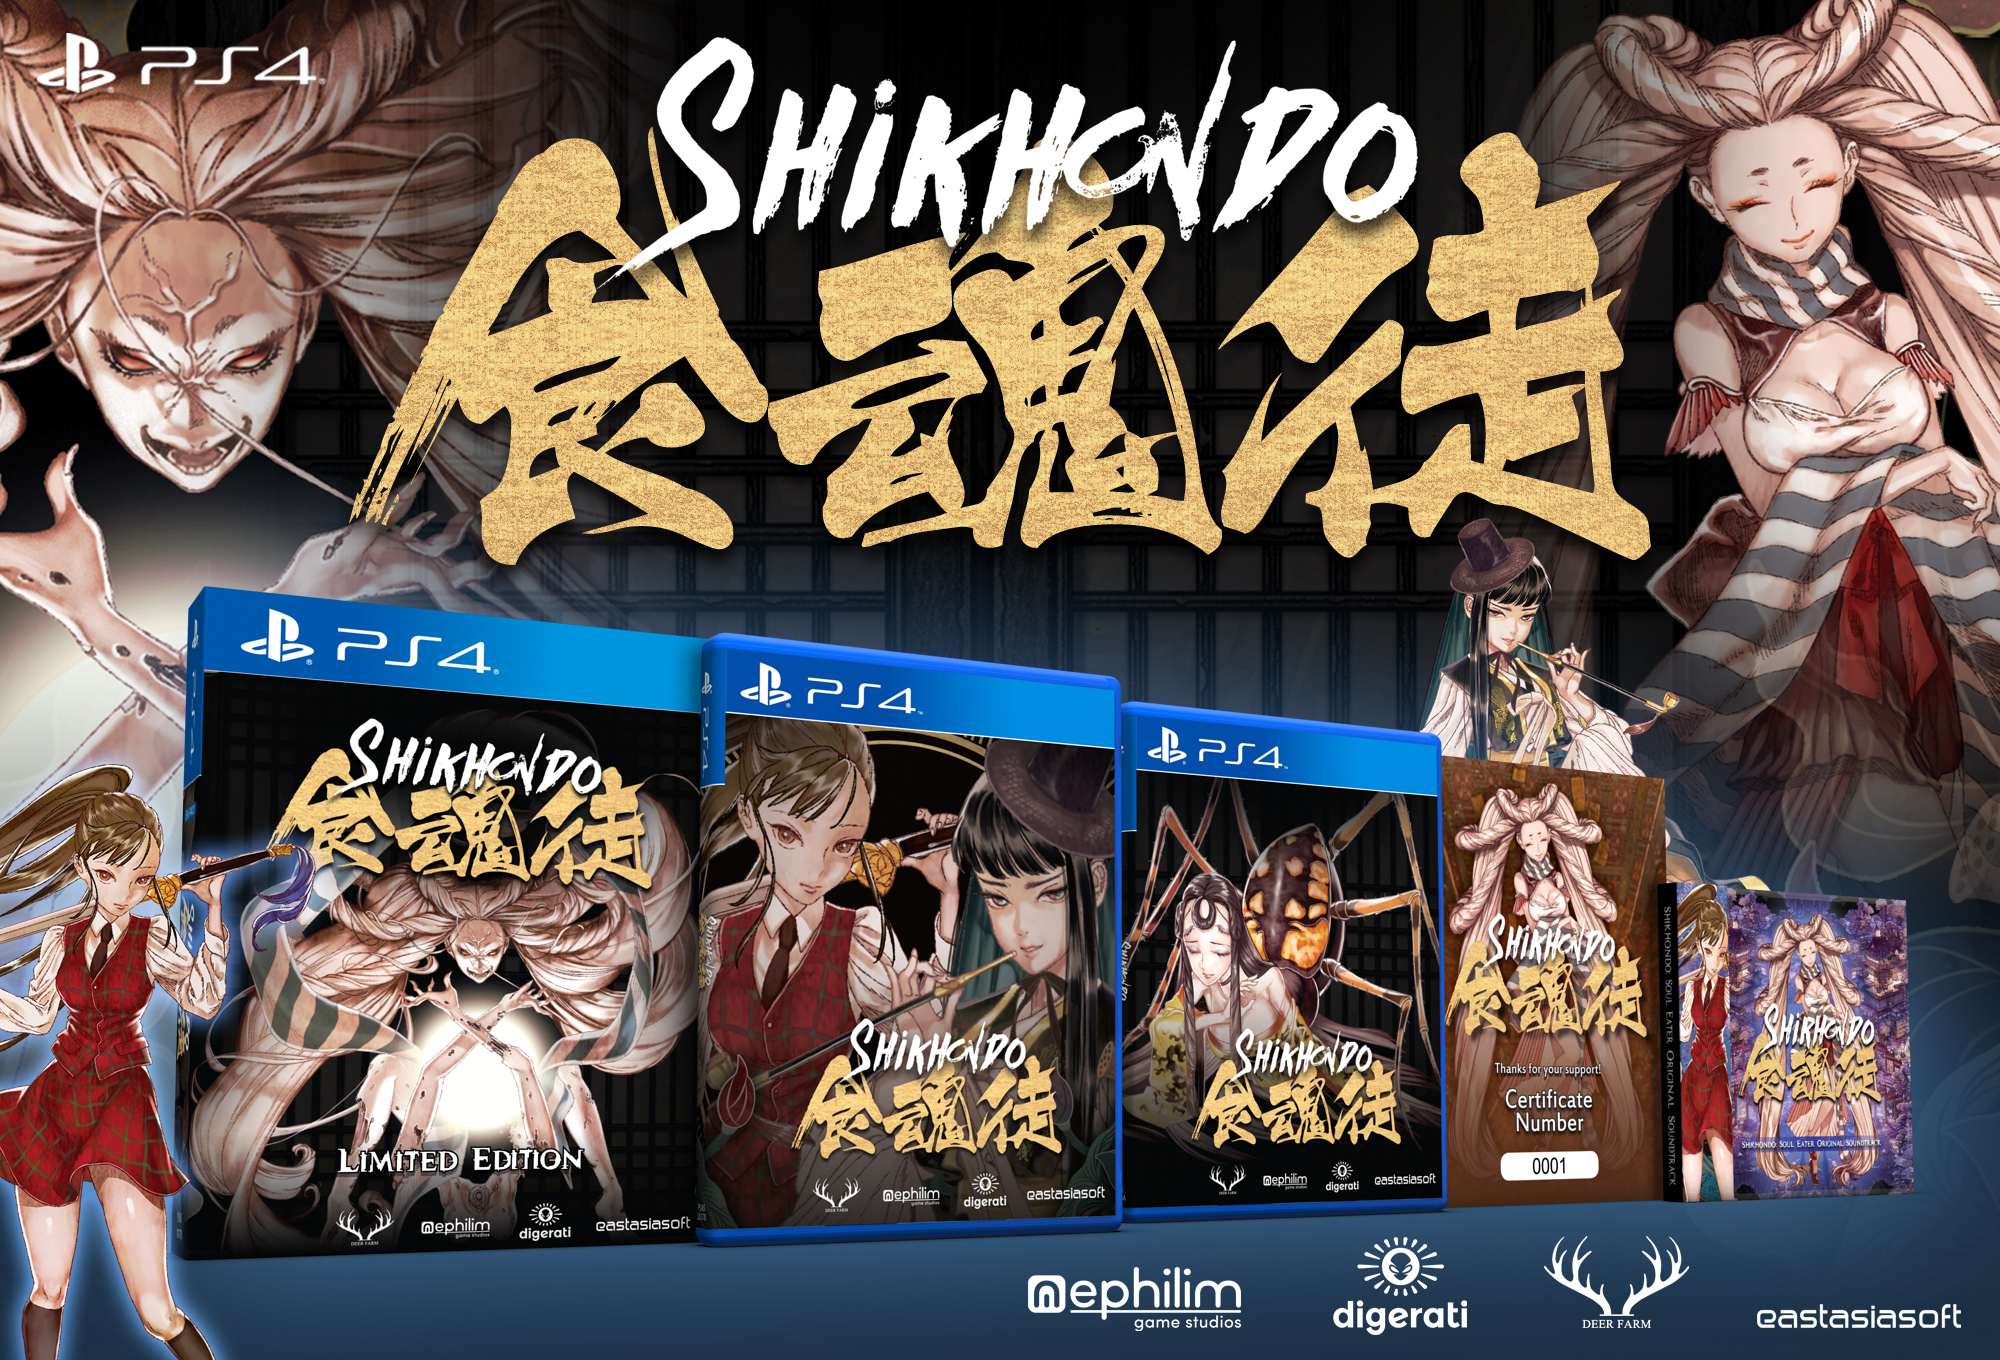 Shikhondo PS4 Limited Edition